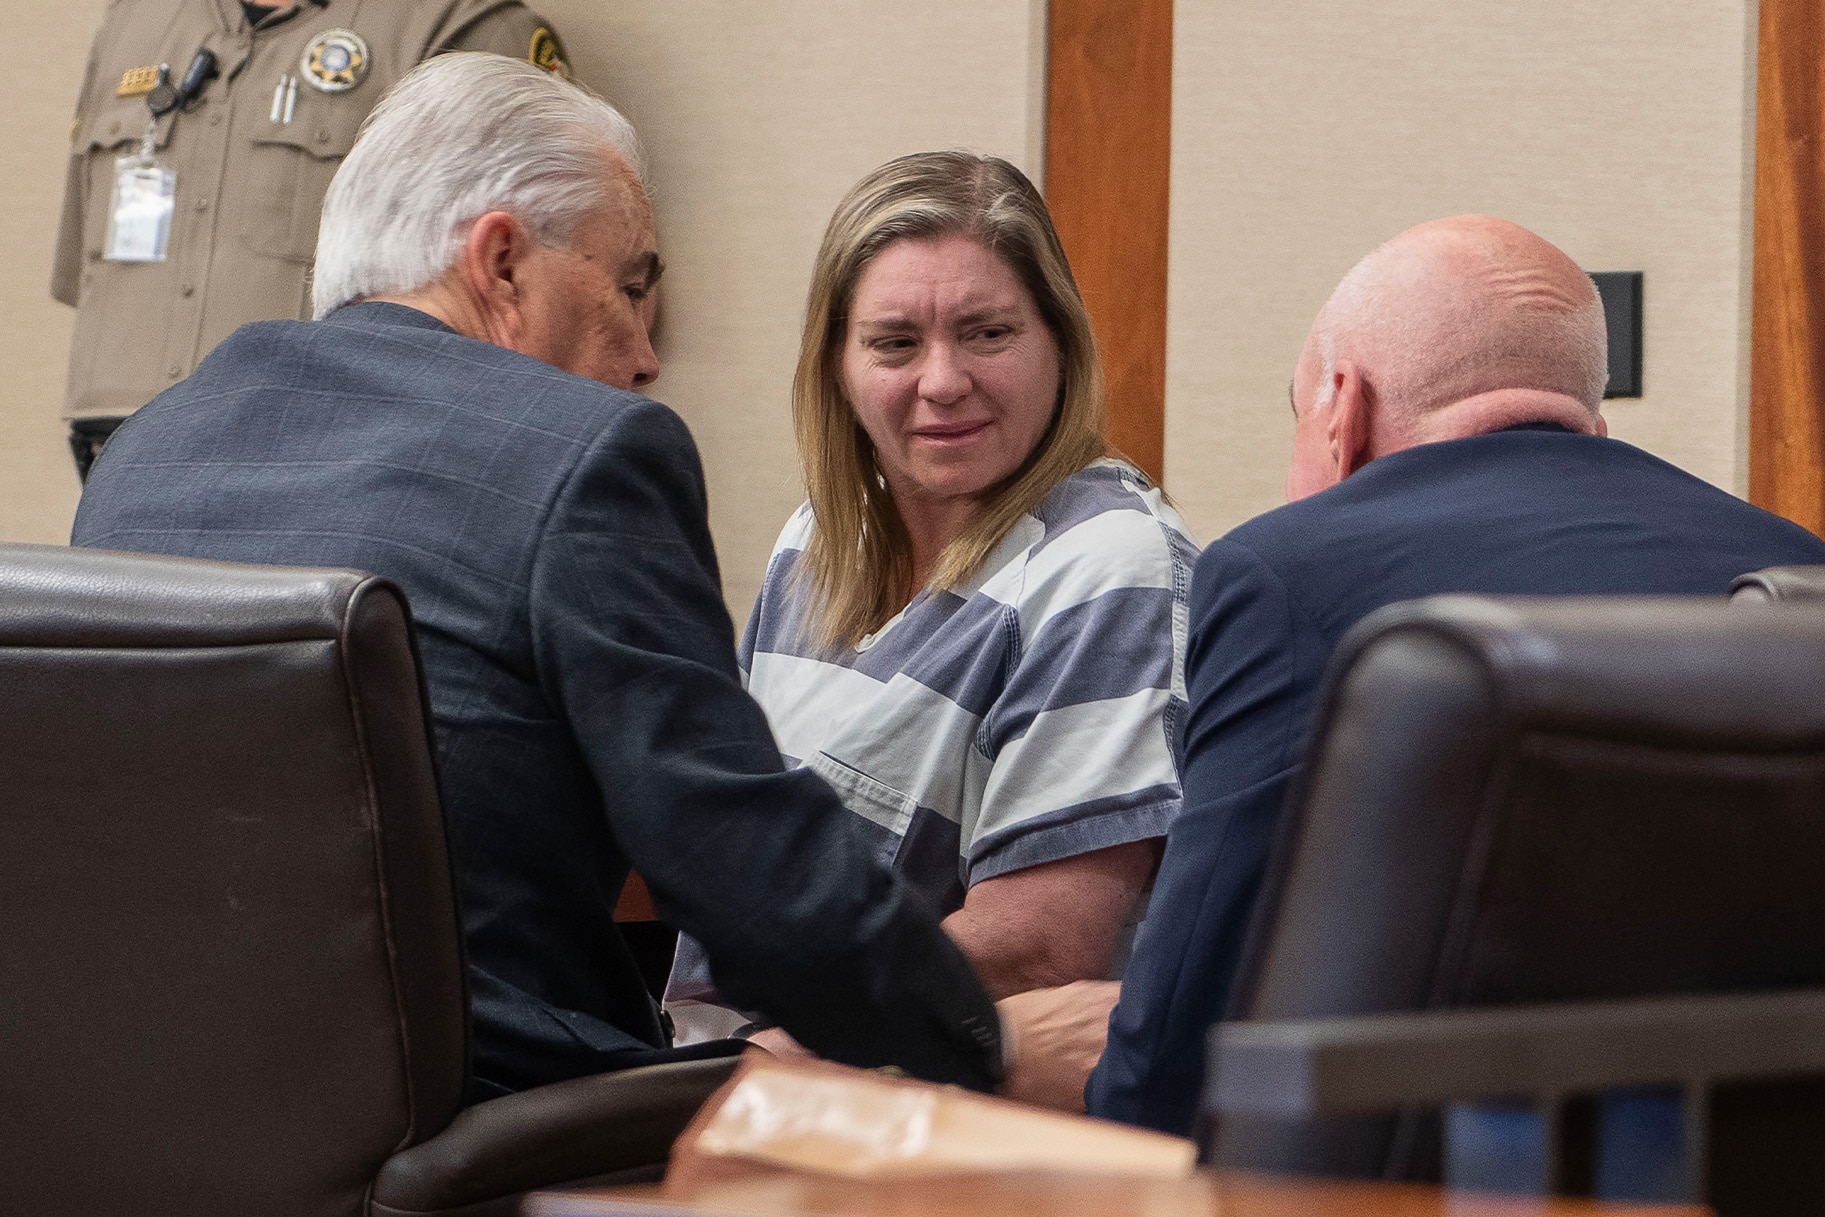 Jodi Hildebrandt speaks to two men in court.